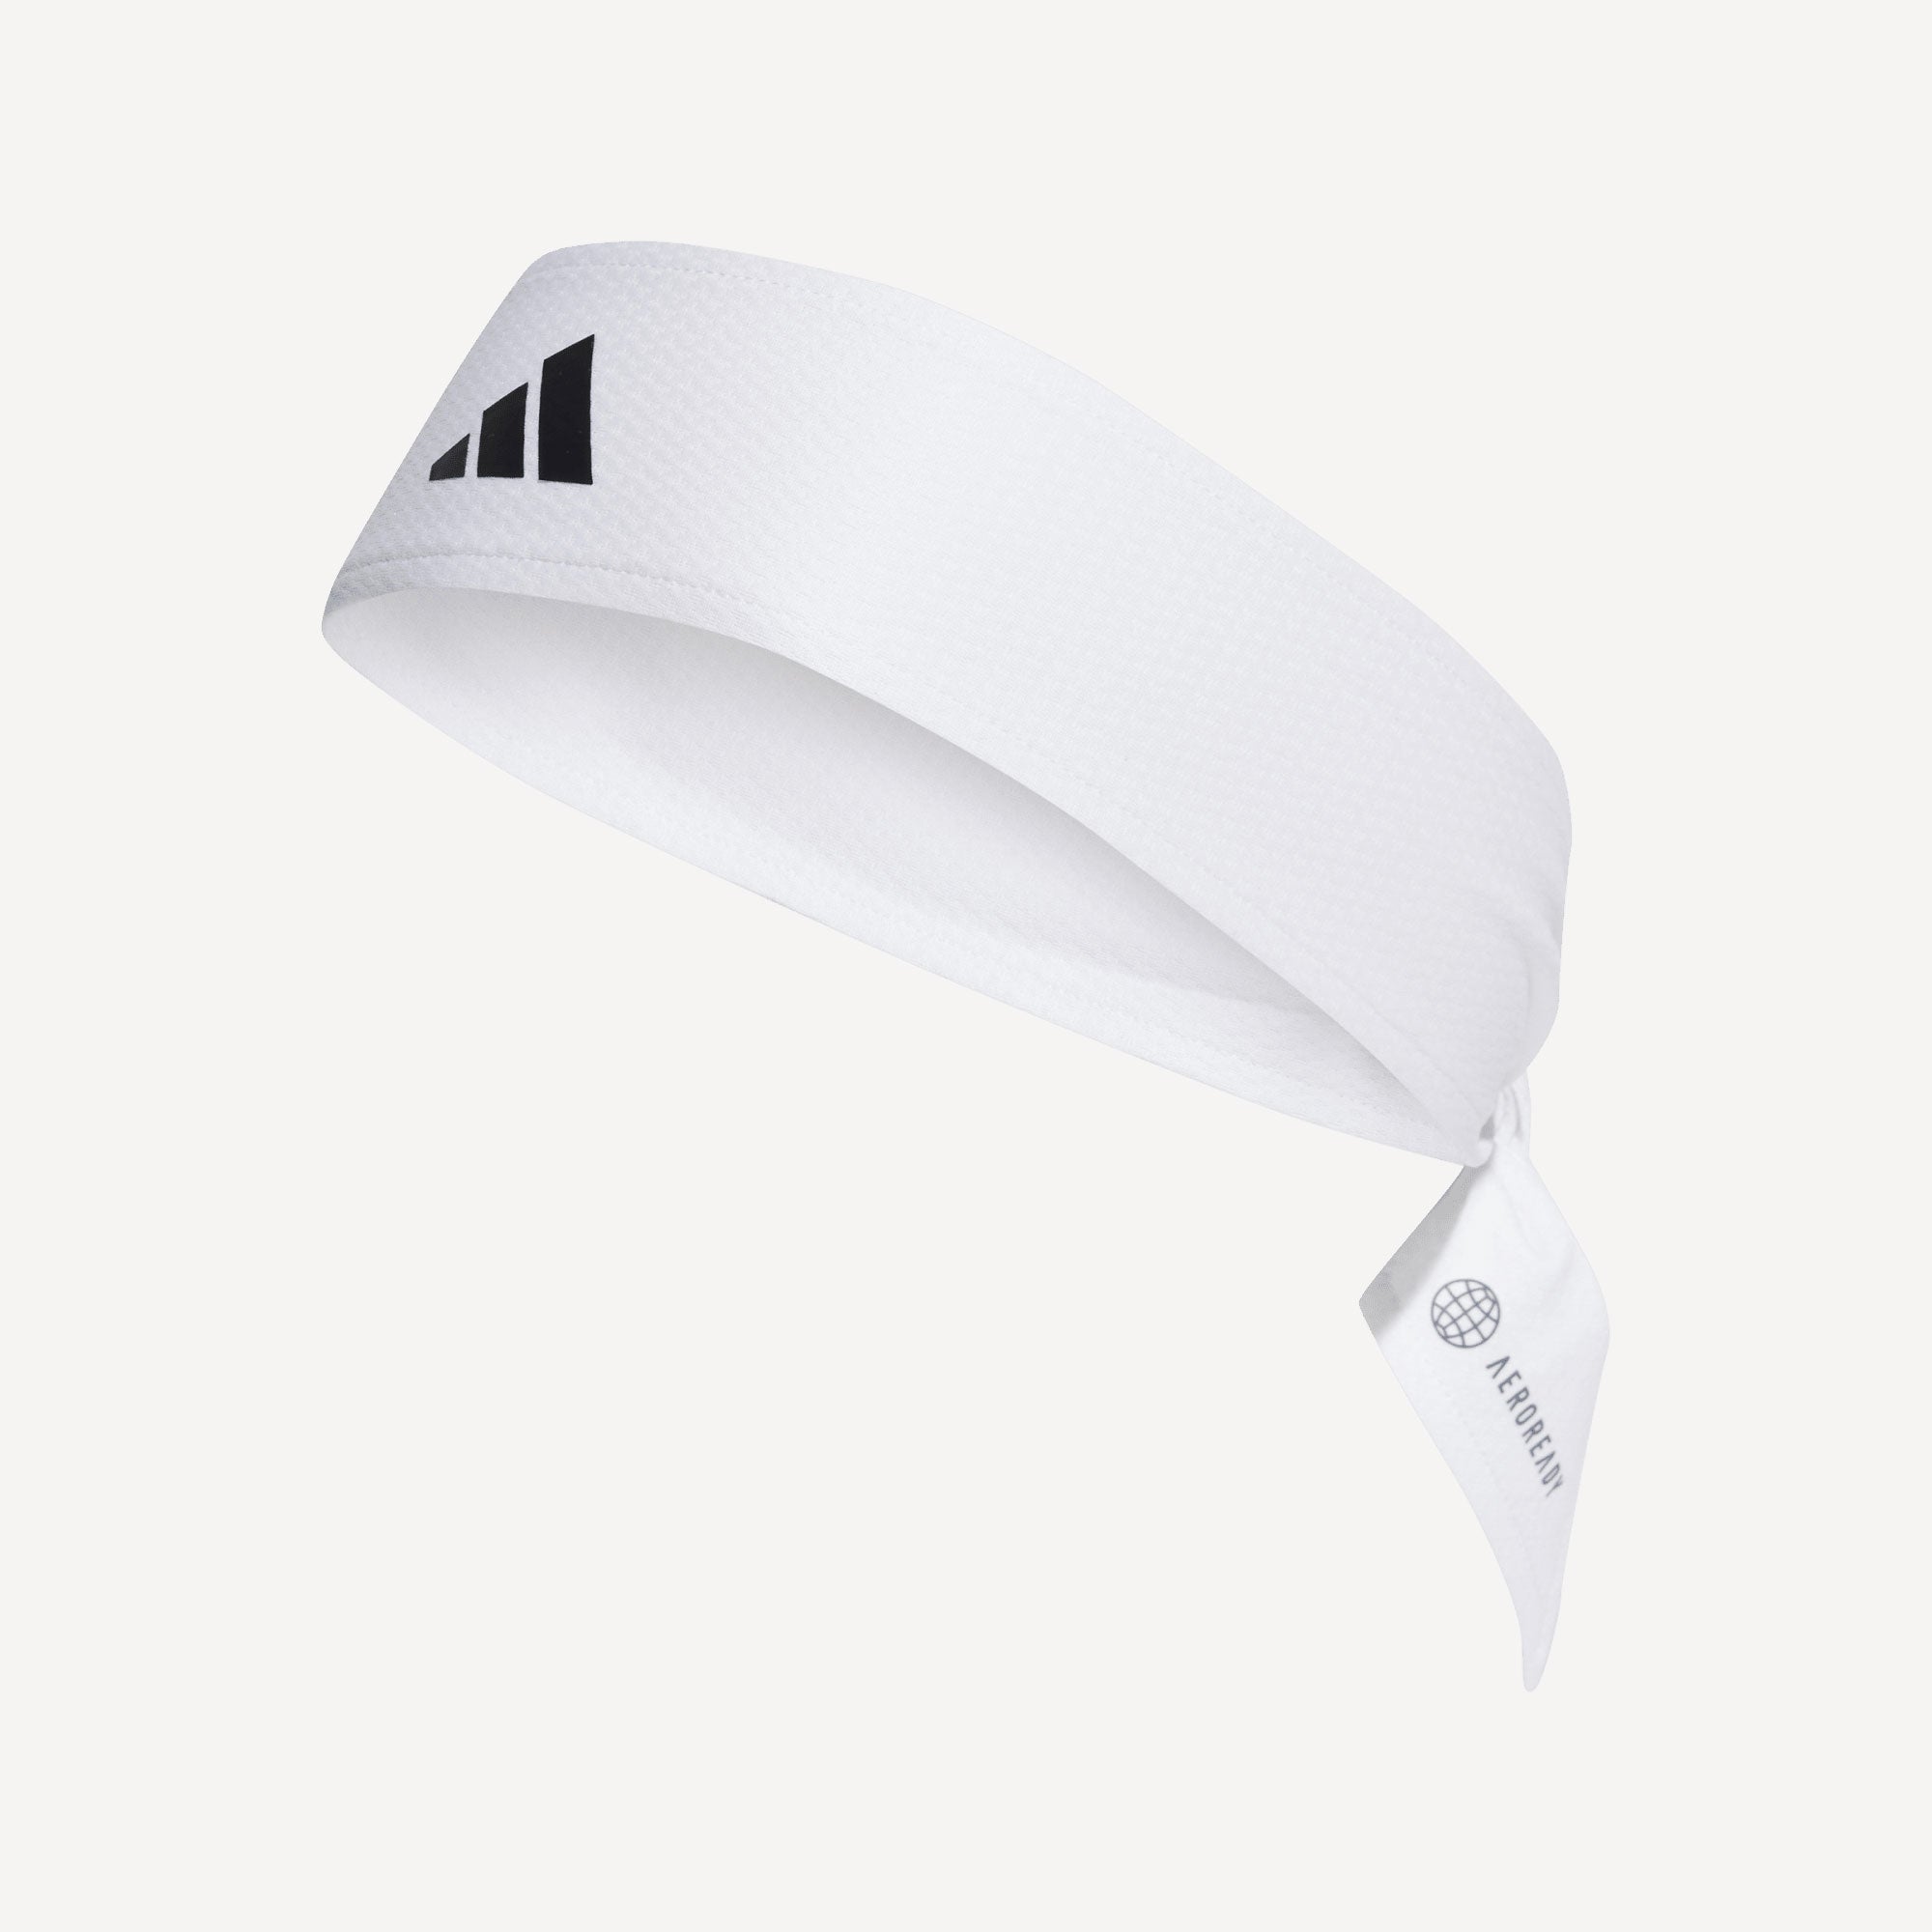 adidas Tennis Tieband - White (1)